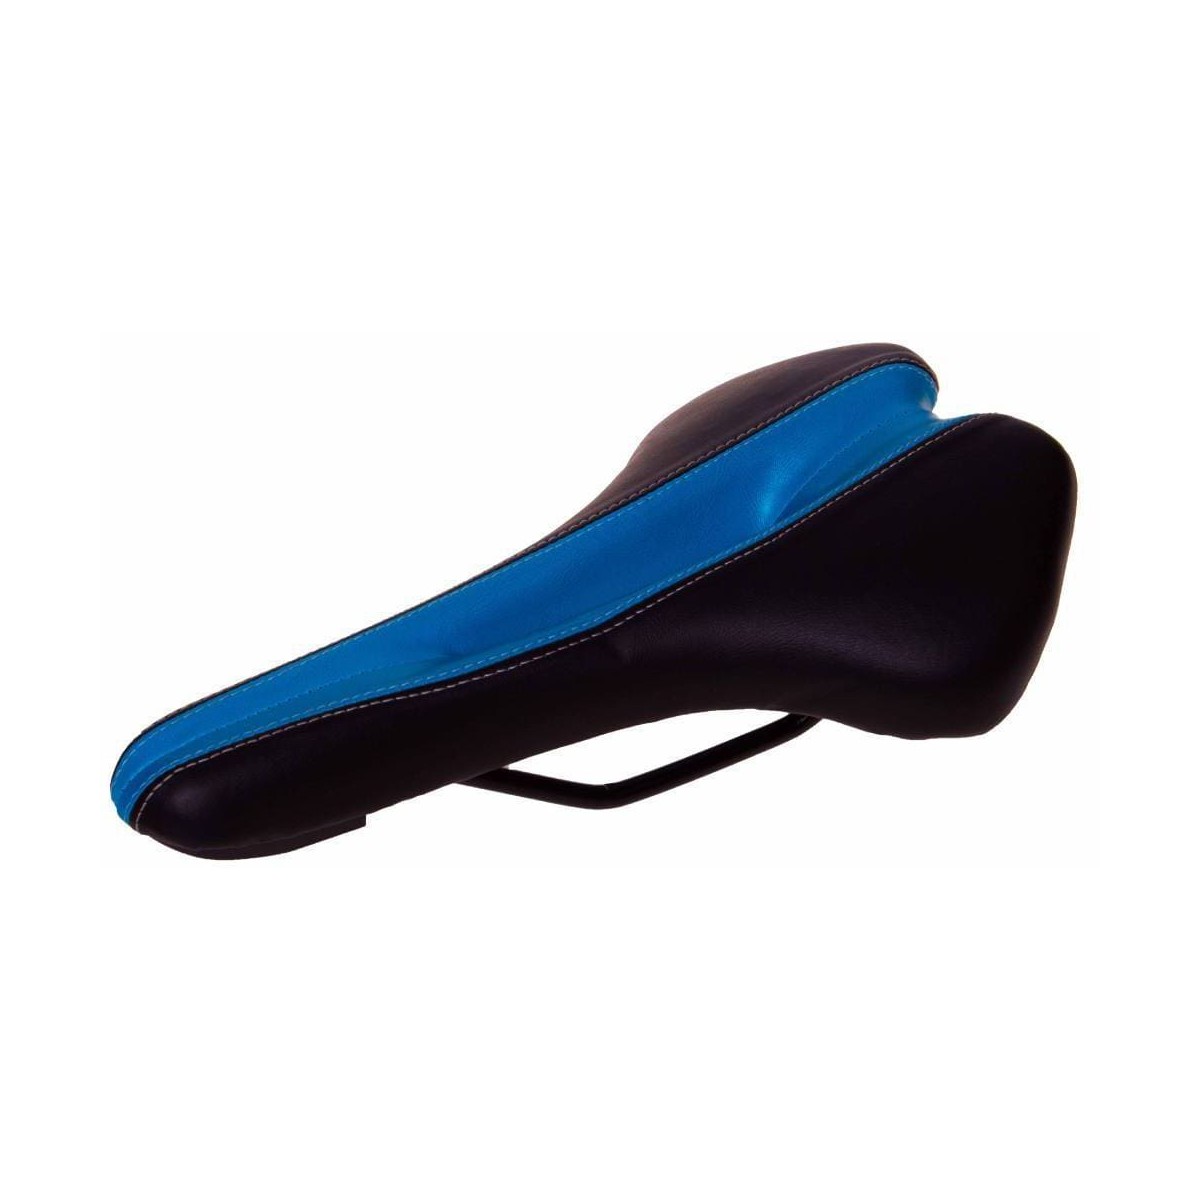 Sillín antiprostático carrerta, mtb FK (270 x 150 mm) en azul y negro